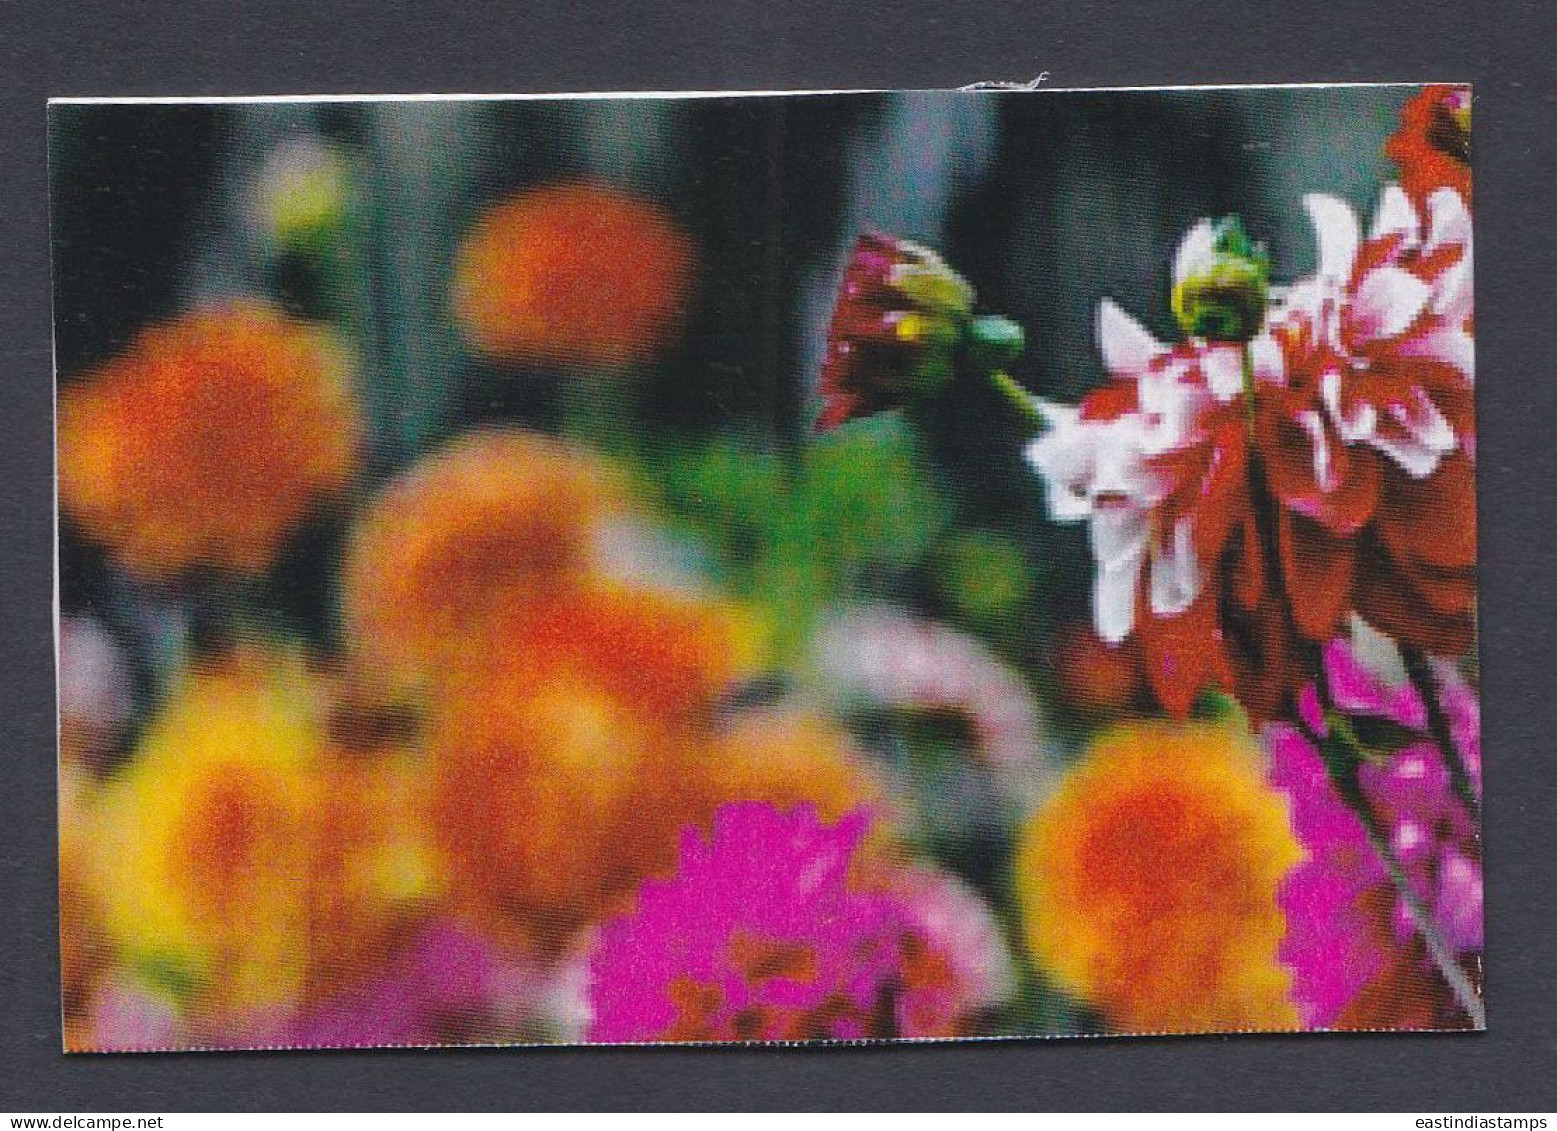 Bangladesh Mint Private Booklet Flower, Flowers, Flora - Bangladesh